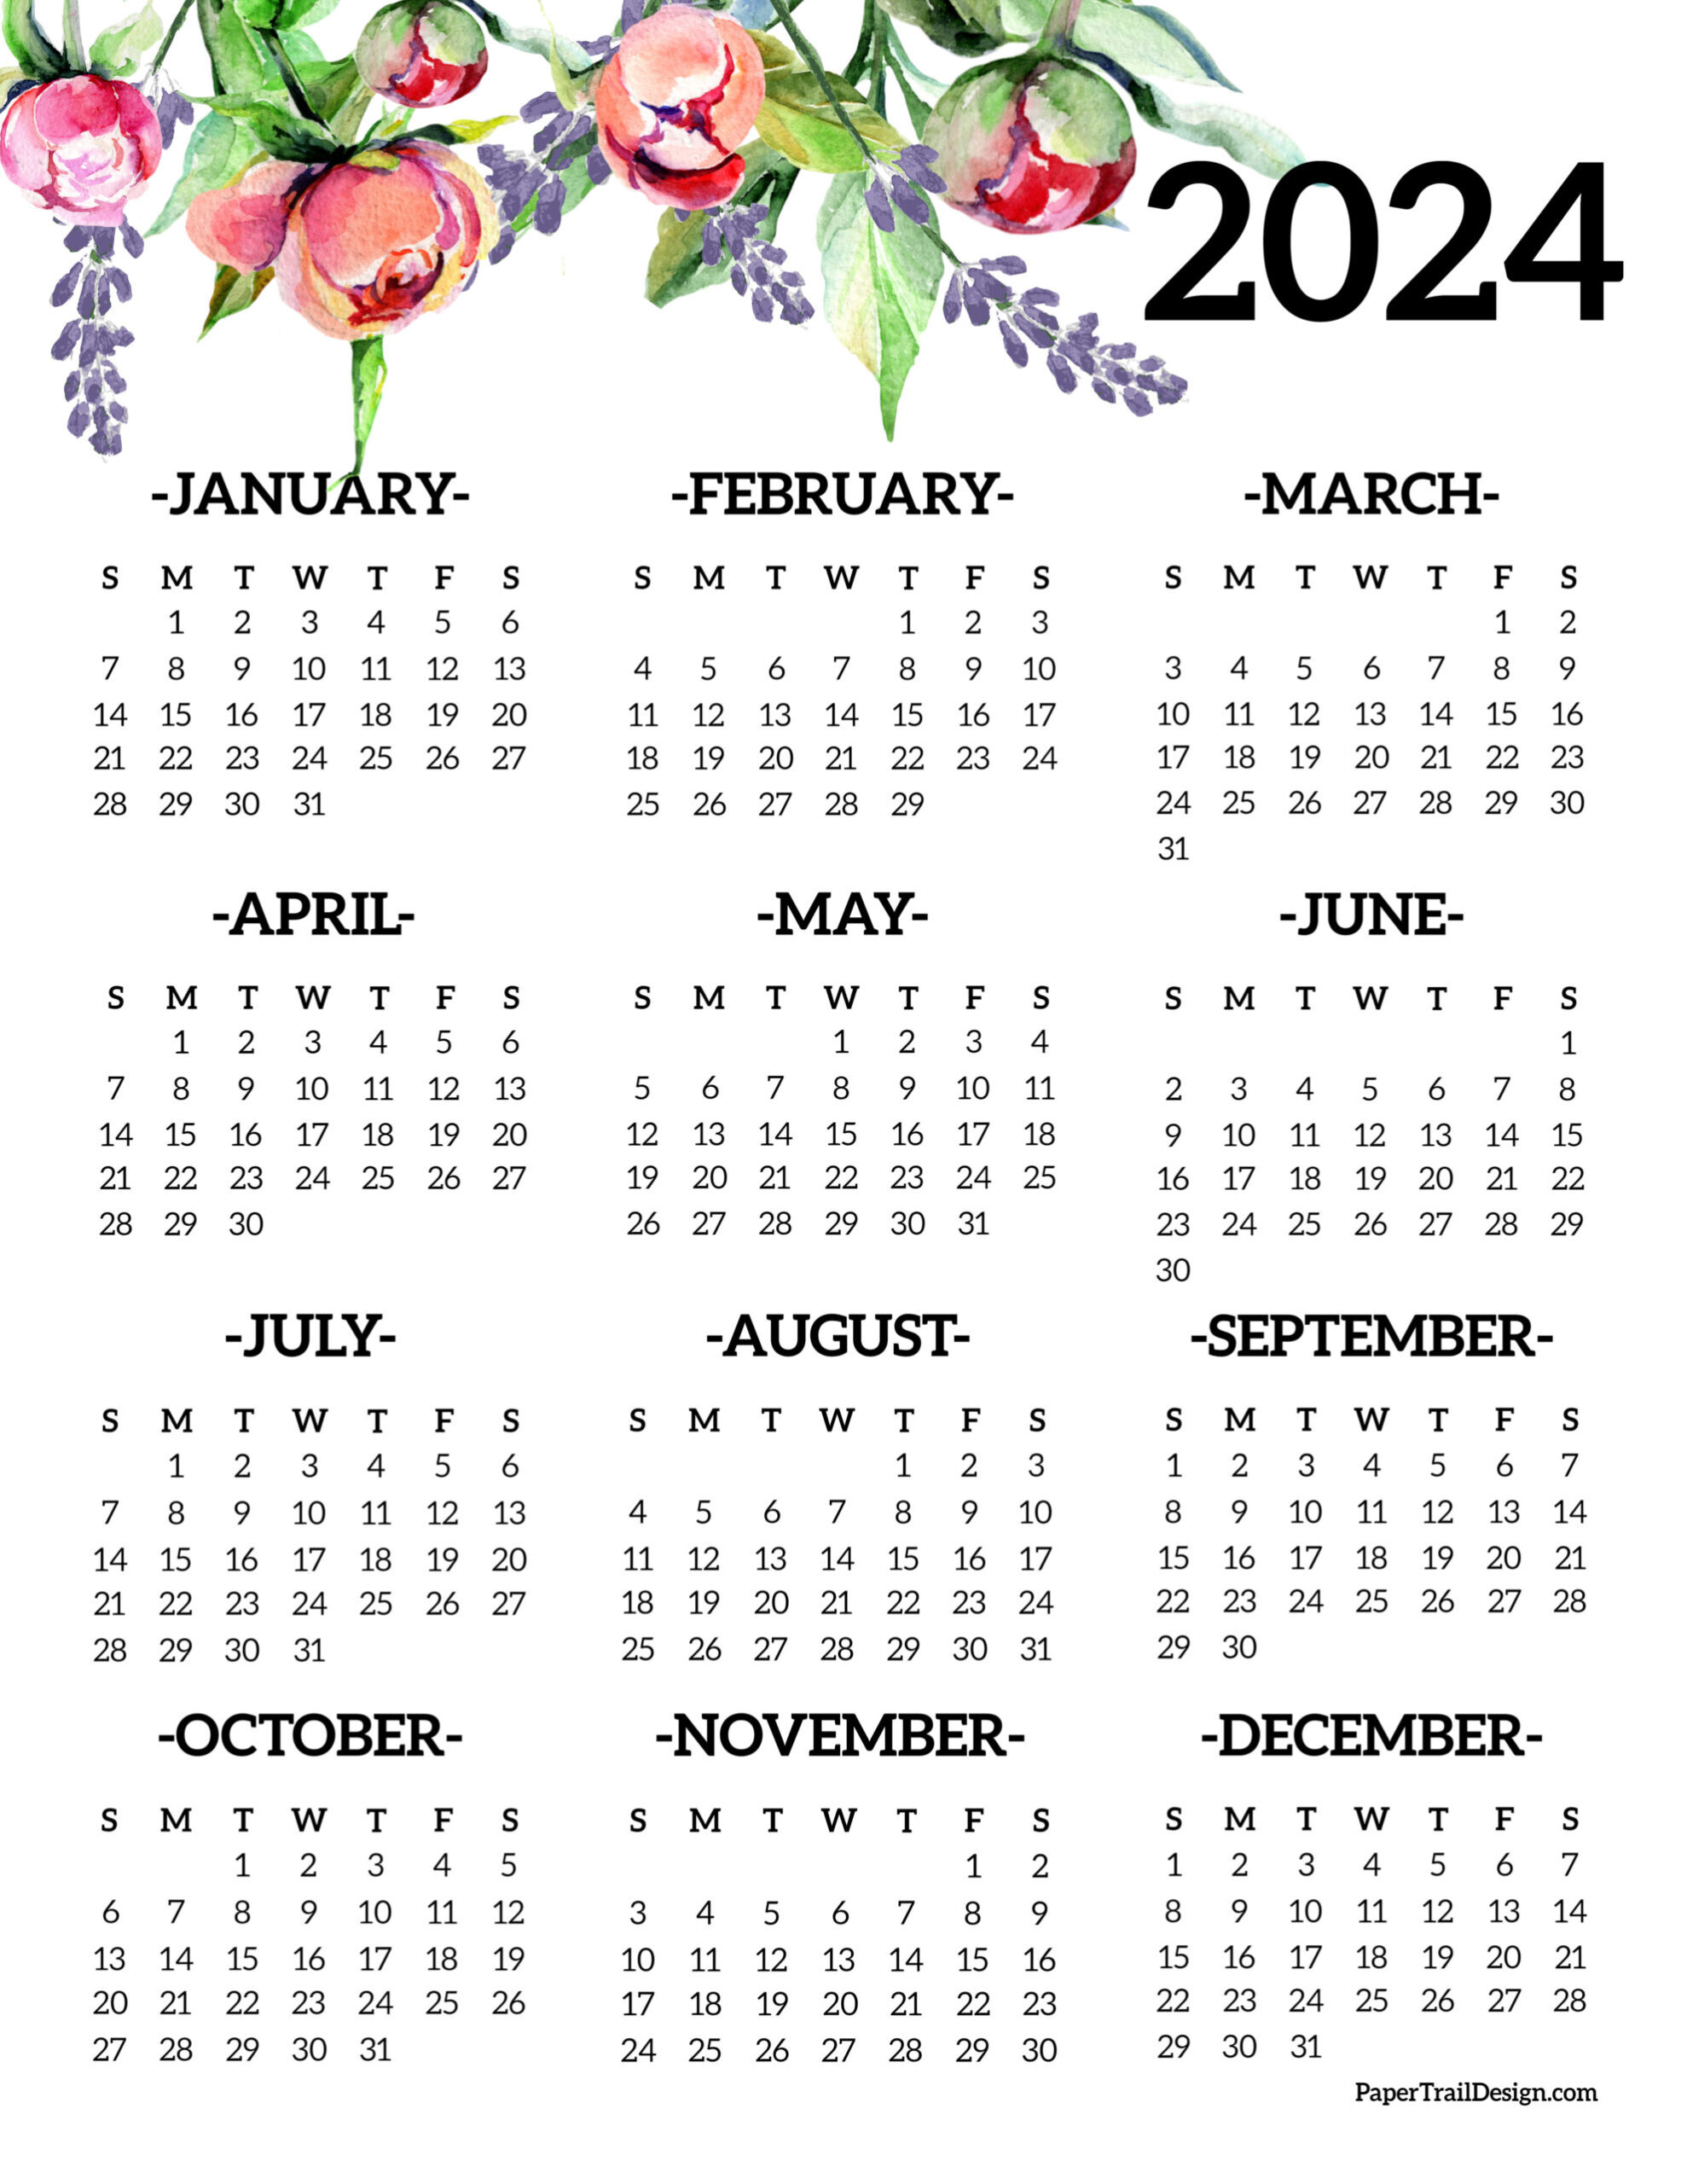 Calendar 2024 Printable One Page - Paper Trail Design | 1 Year Printable Calendar 2024